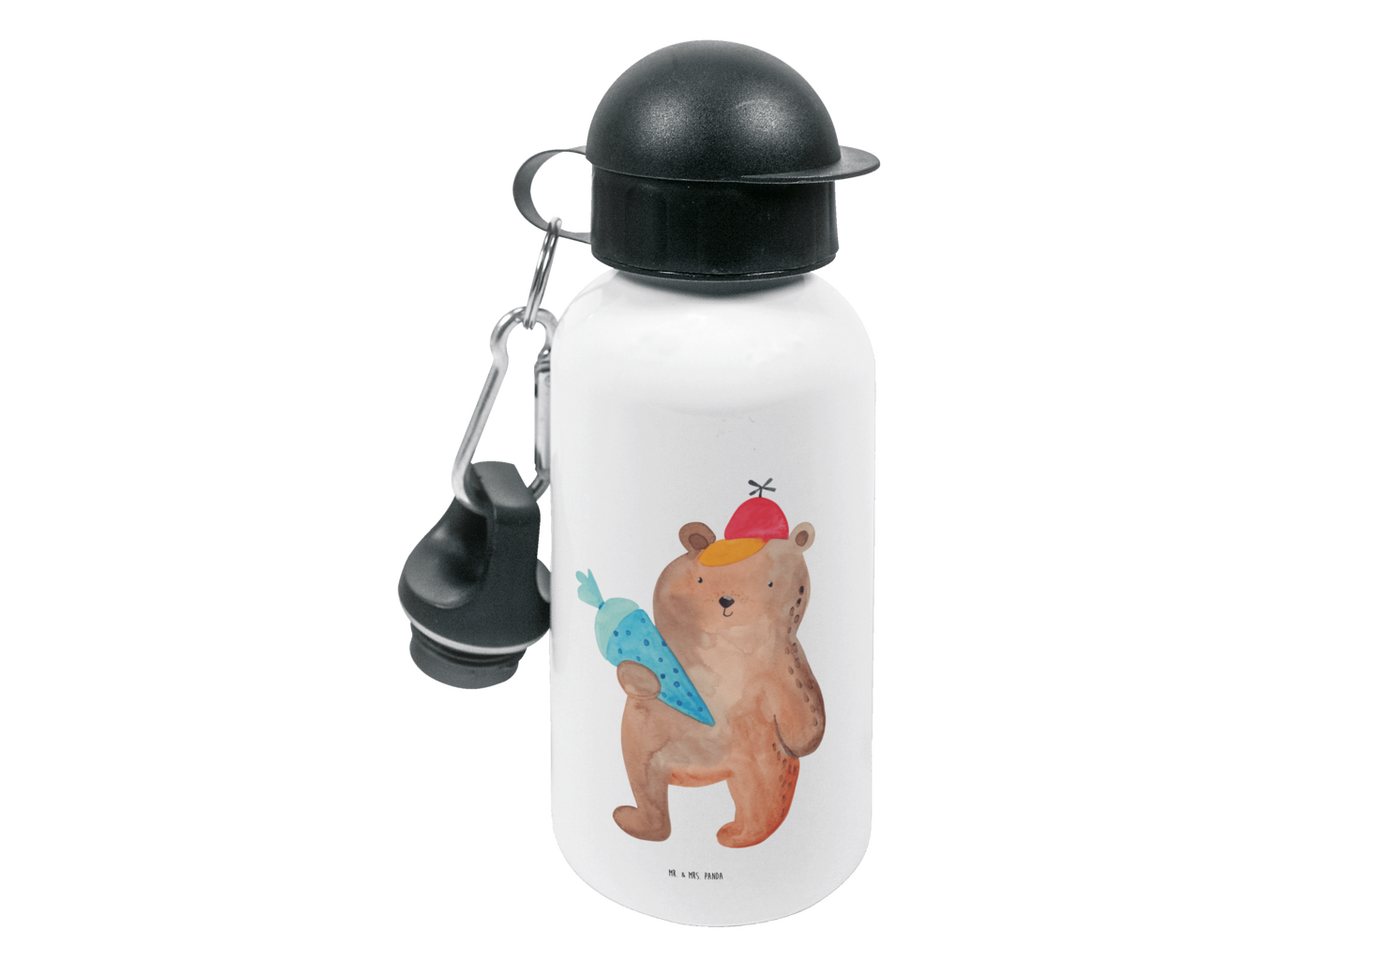 Mr. & Mrs. Panda Trinkflasche Bär Schultüte - Weiß - Geschenk, Schulanfang, Kindertrinkflasche, Bär, Farbenfrohe Motive von Mr. & Mrs. Panda